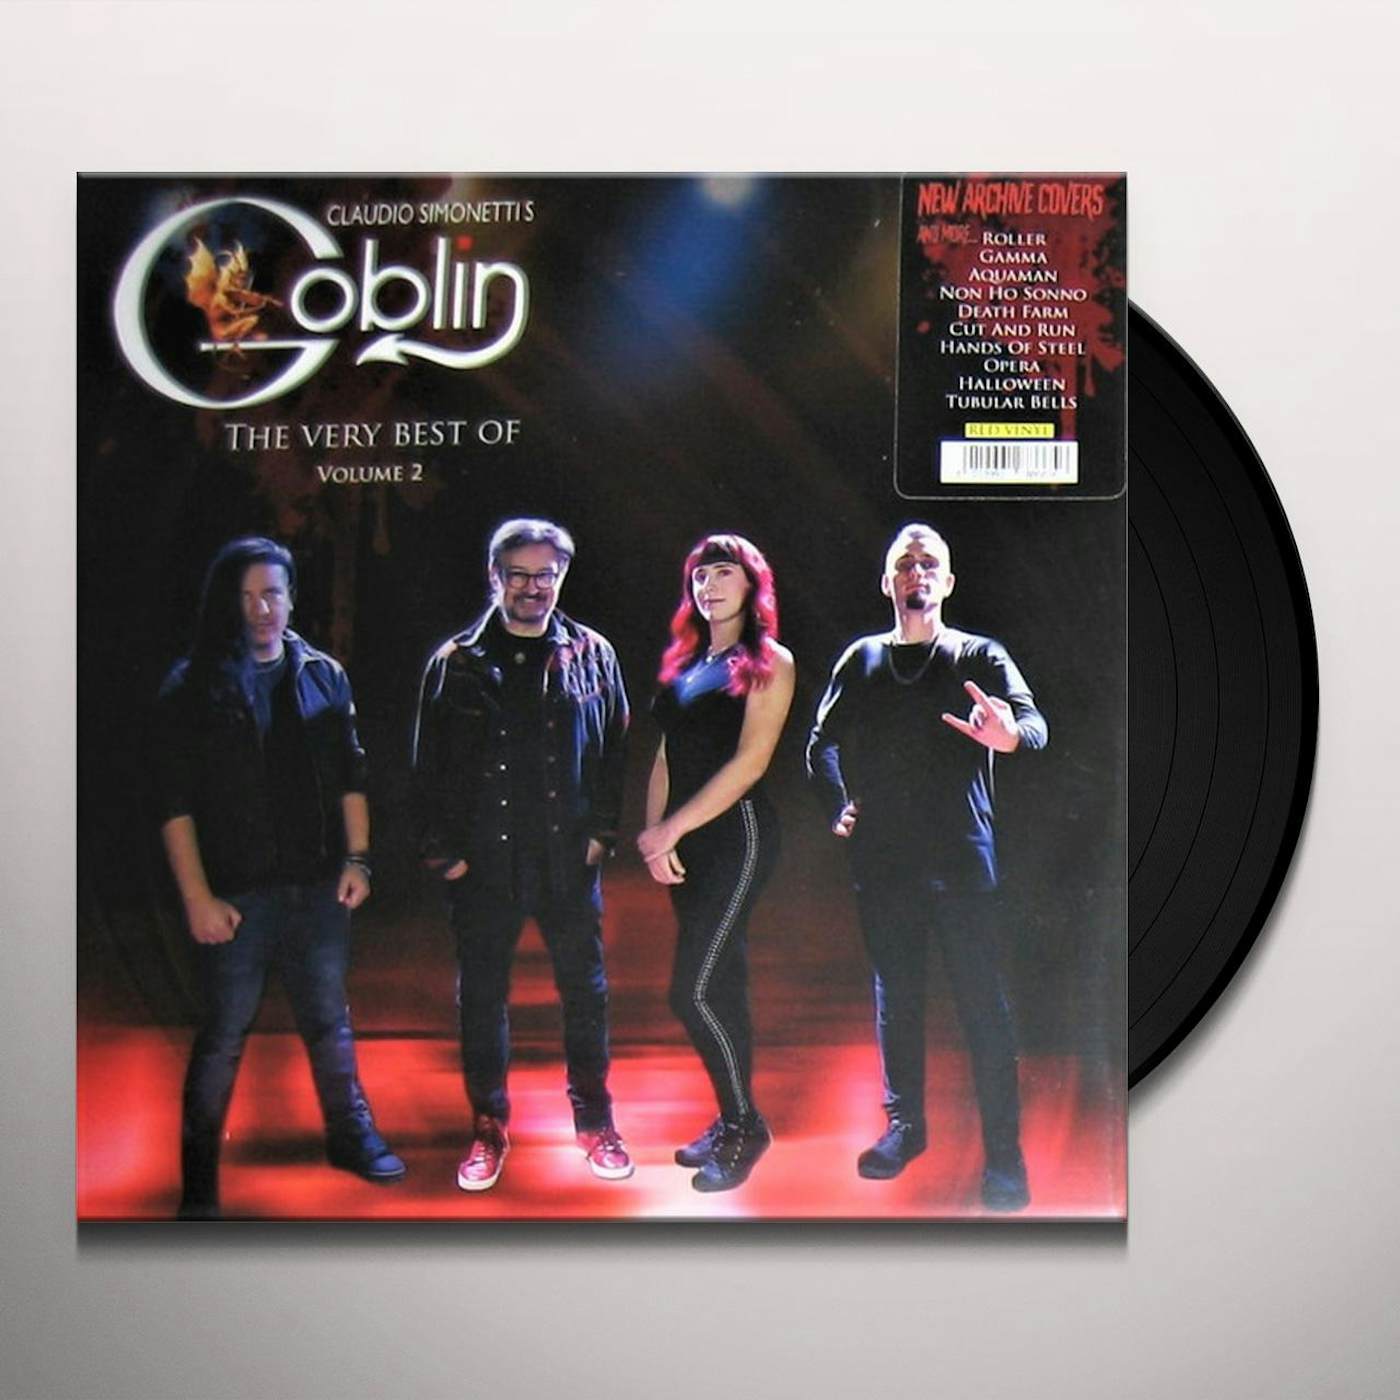 Claudio Simonetti's Goblin VERY BEST: VOL.2 (LIMITED/COLORED VINYL) Vinyl Record